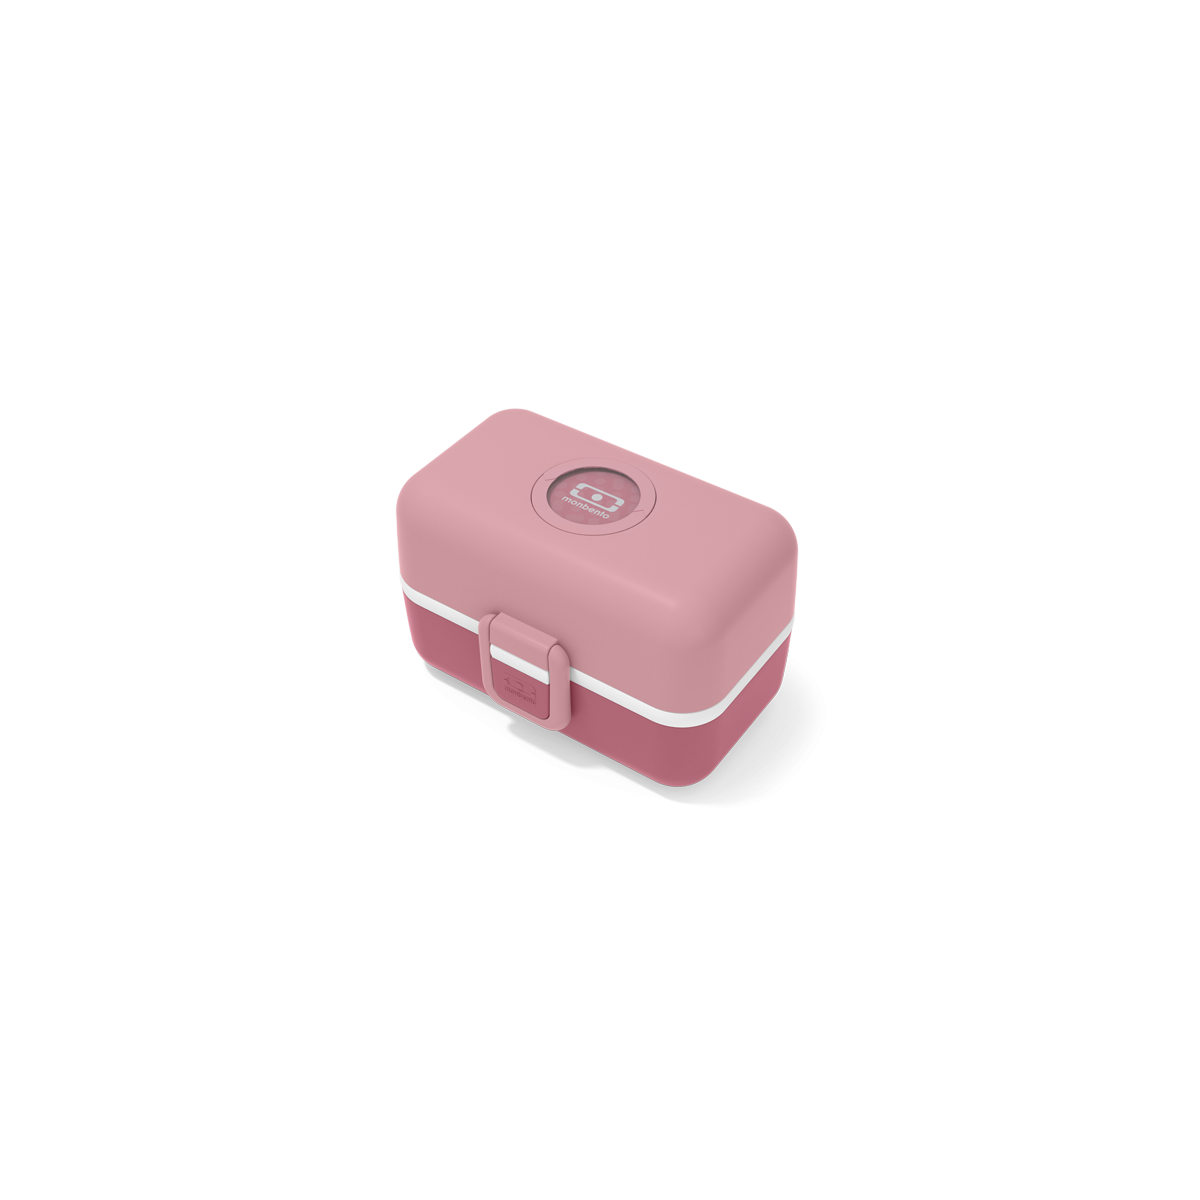 Lunch box Mb Tresor de monbento rosa blush